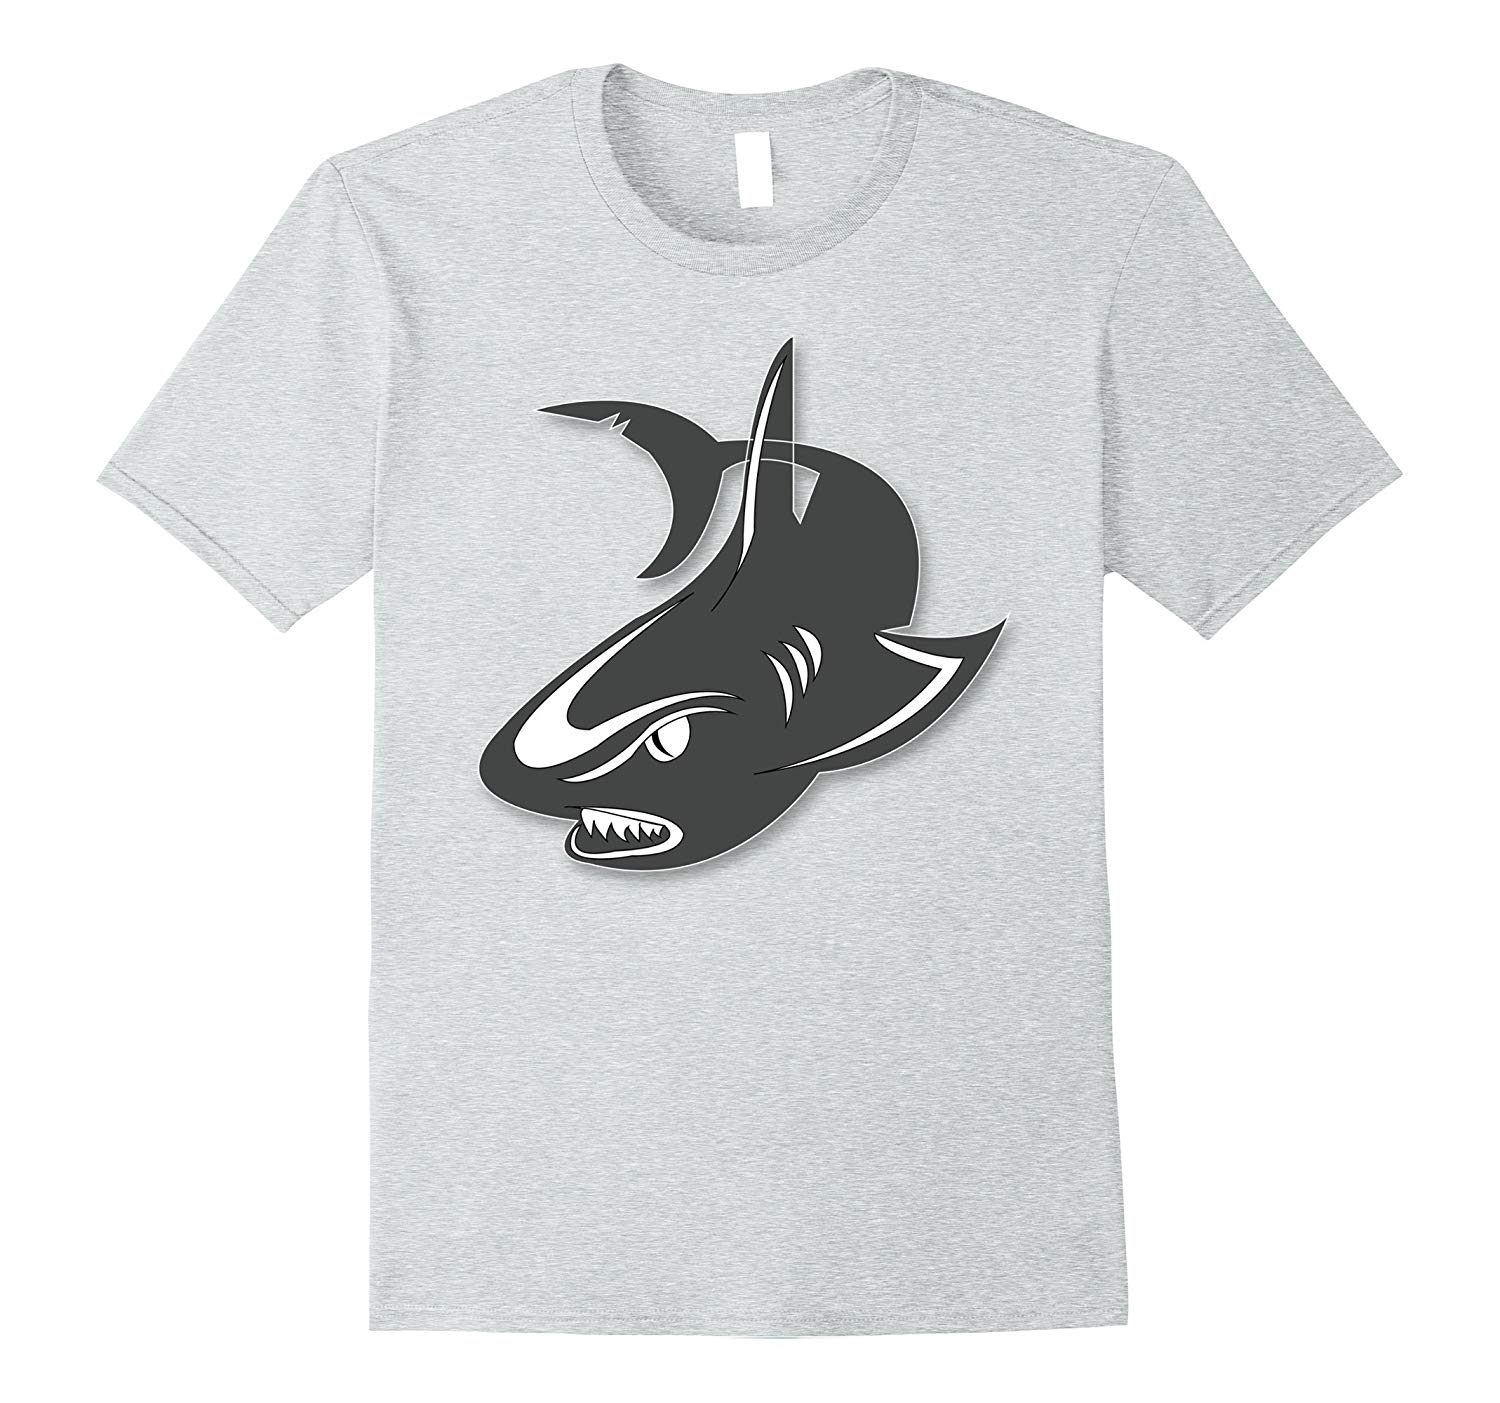 Cool Shark Logo - Cool Shark Graphic Print Tshirt Tee by Sharks Made Better-PL – Polozatee